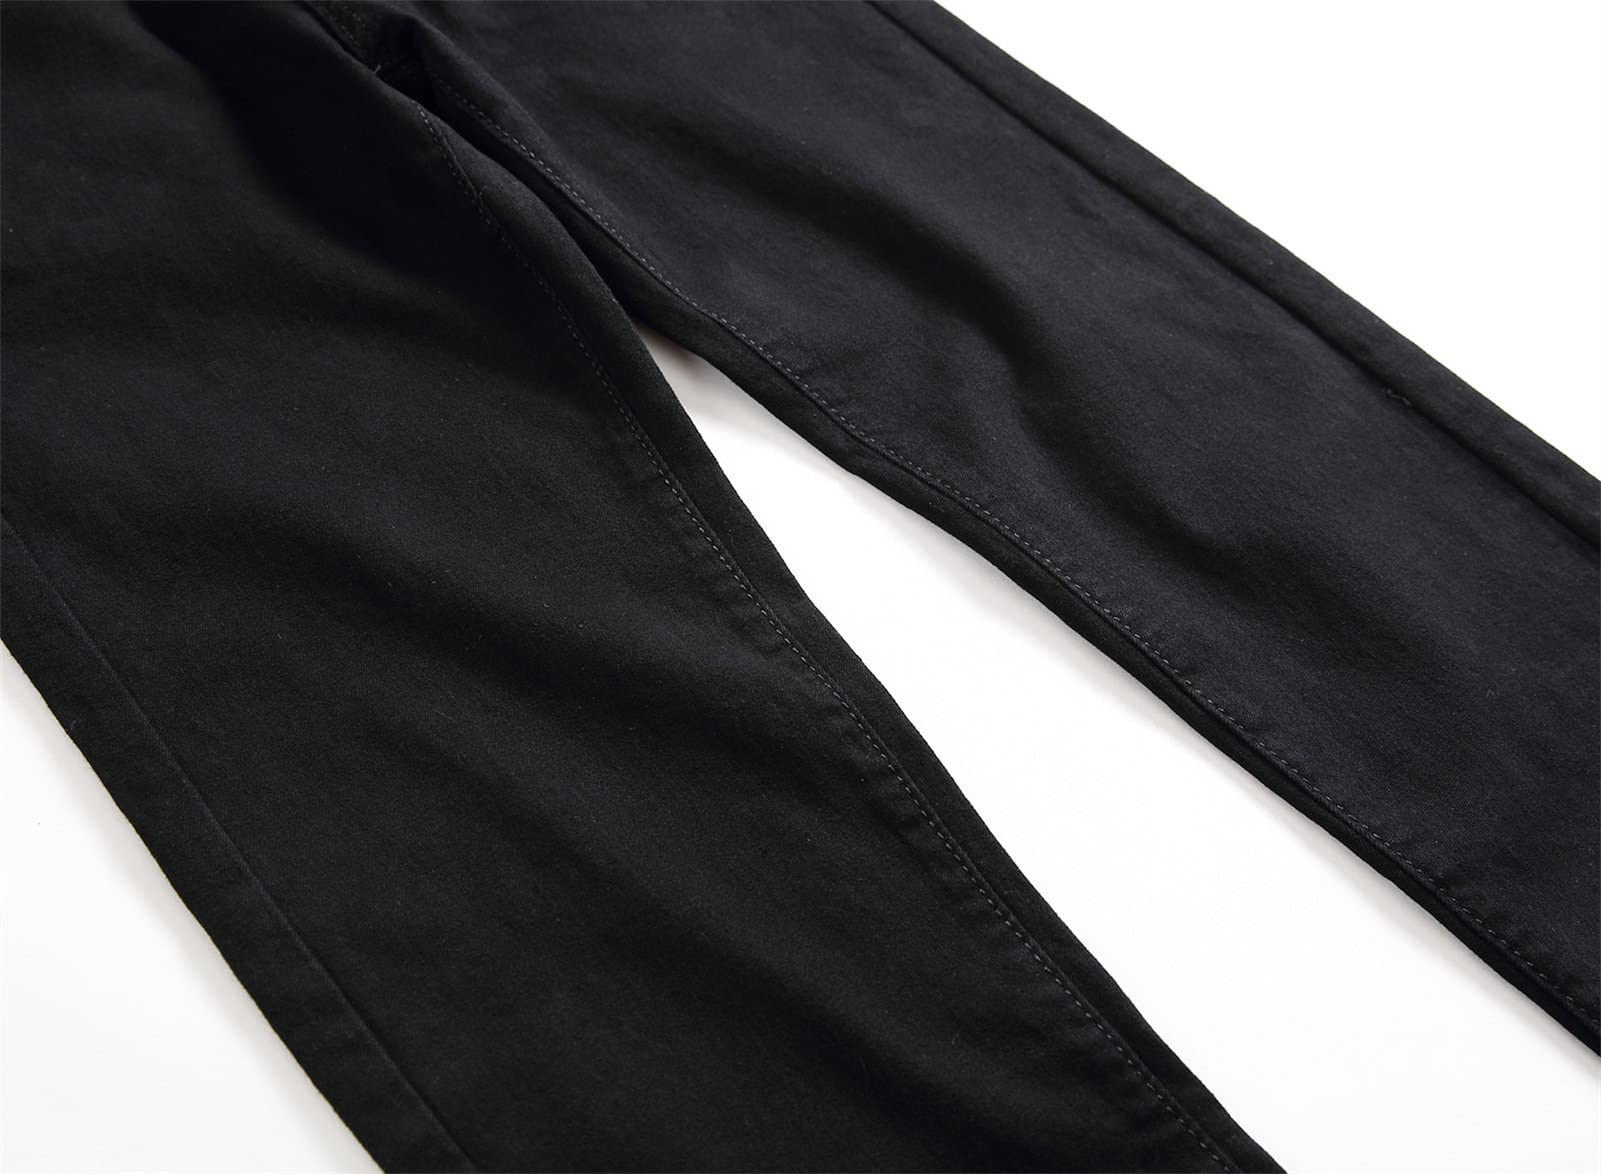 Men's Slim Fit Skinny Stretch Jeans Vintage Distressed Comfy Denim Pants Washed Straight Leg Comfy Jean Trousers (Black,32)